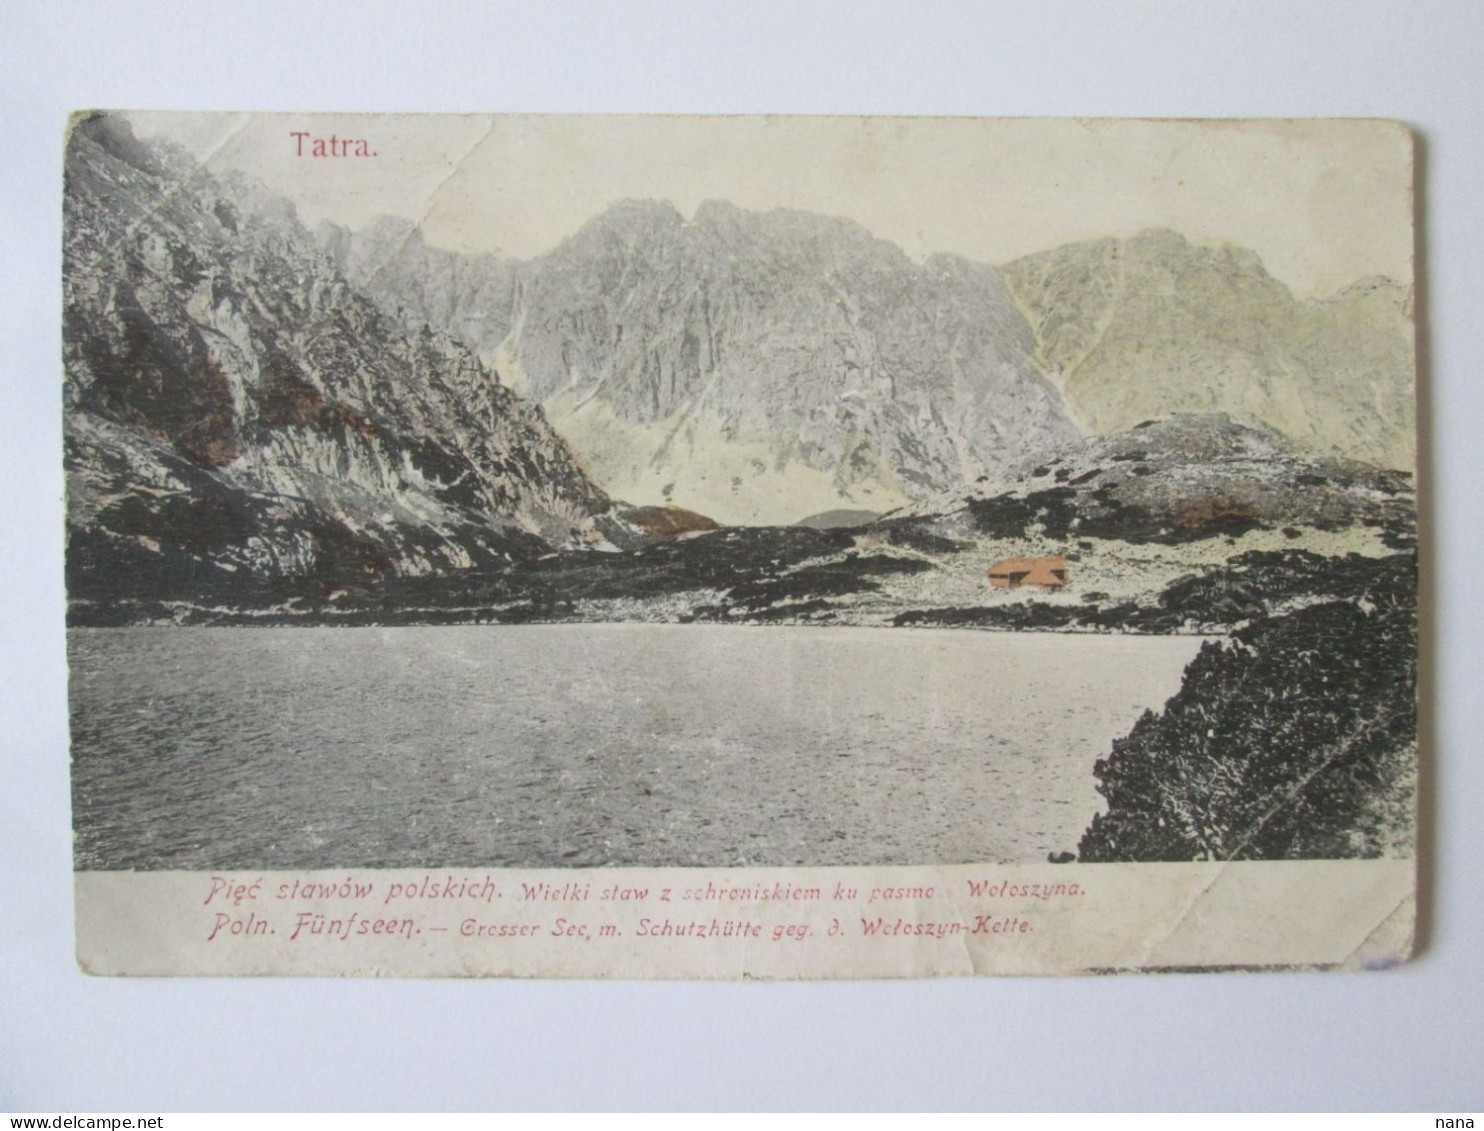 Pologne-Tatras/Piec Stawow Polskich Carte Postale 1905/Poland-Tatra Mountains Unused Postcard 1905 - Polonia